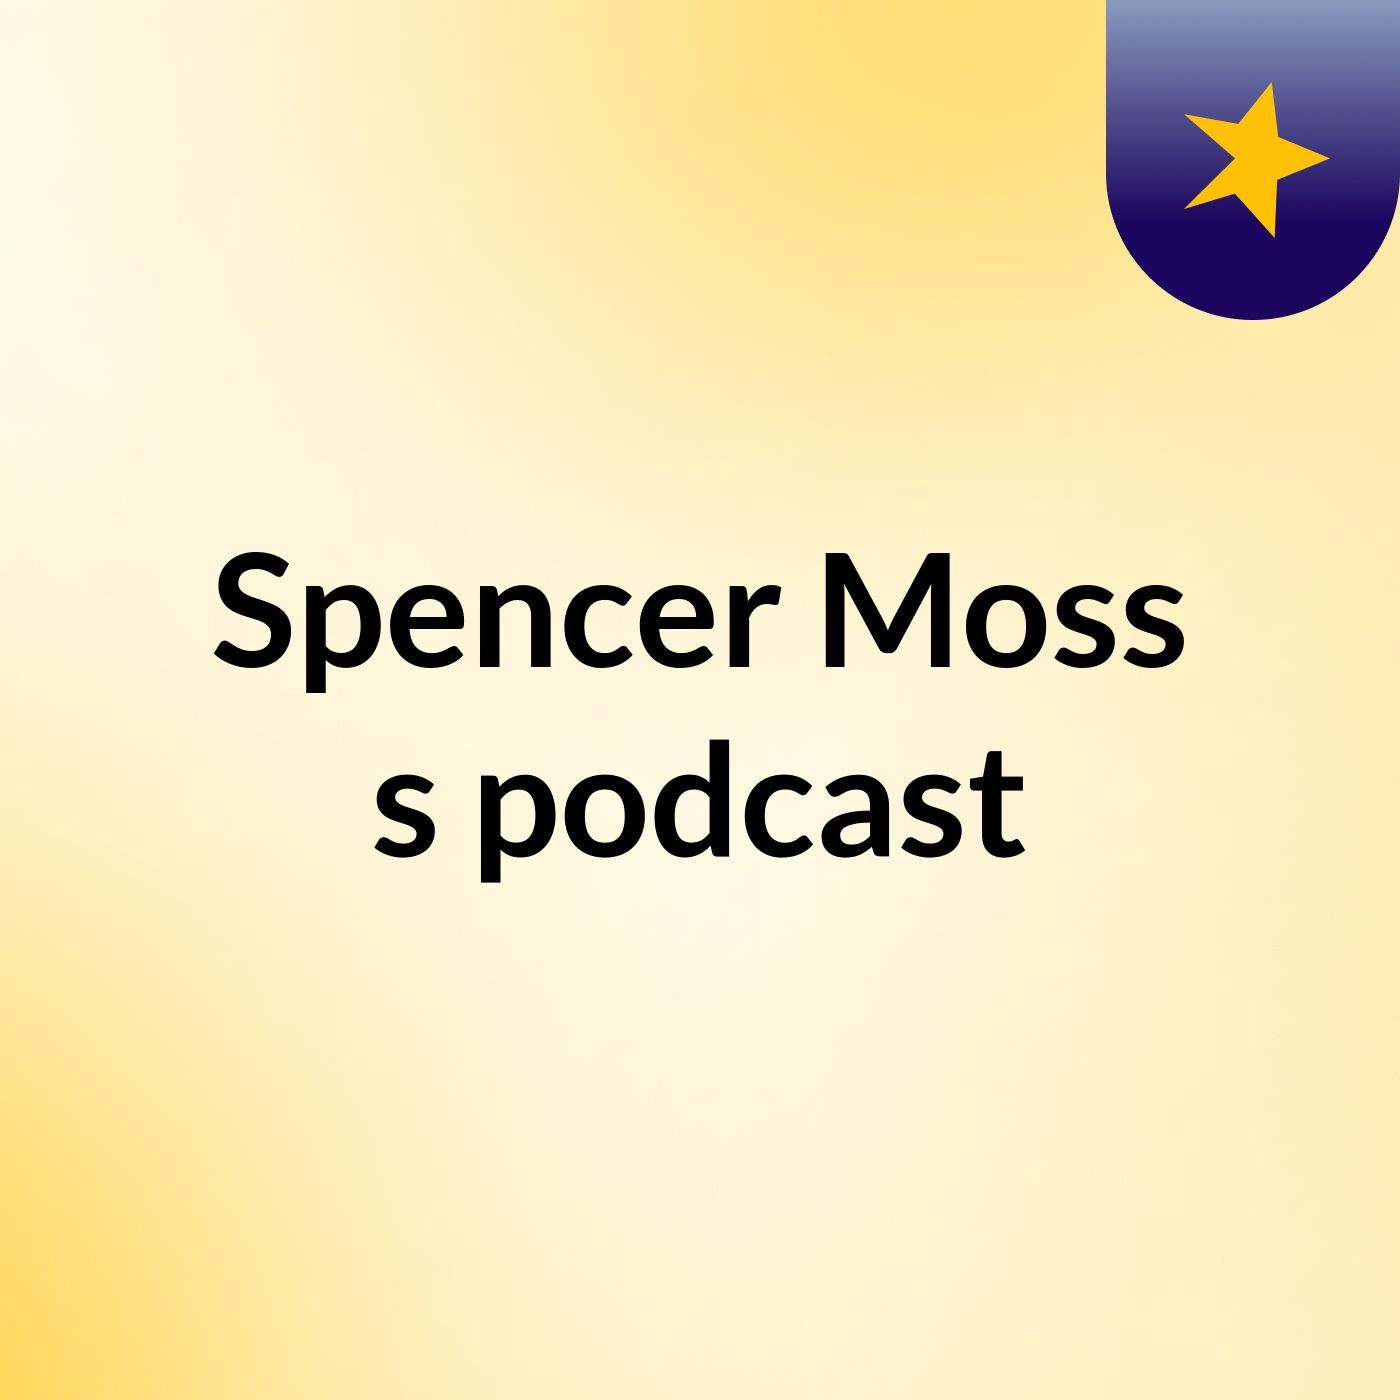 Episode 2 - Spencer Moss's podcast